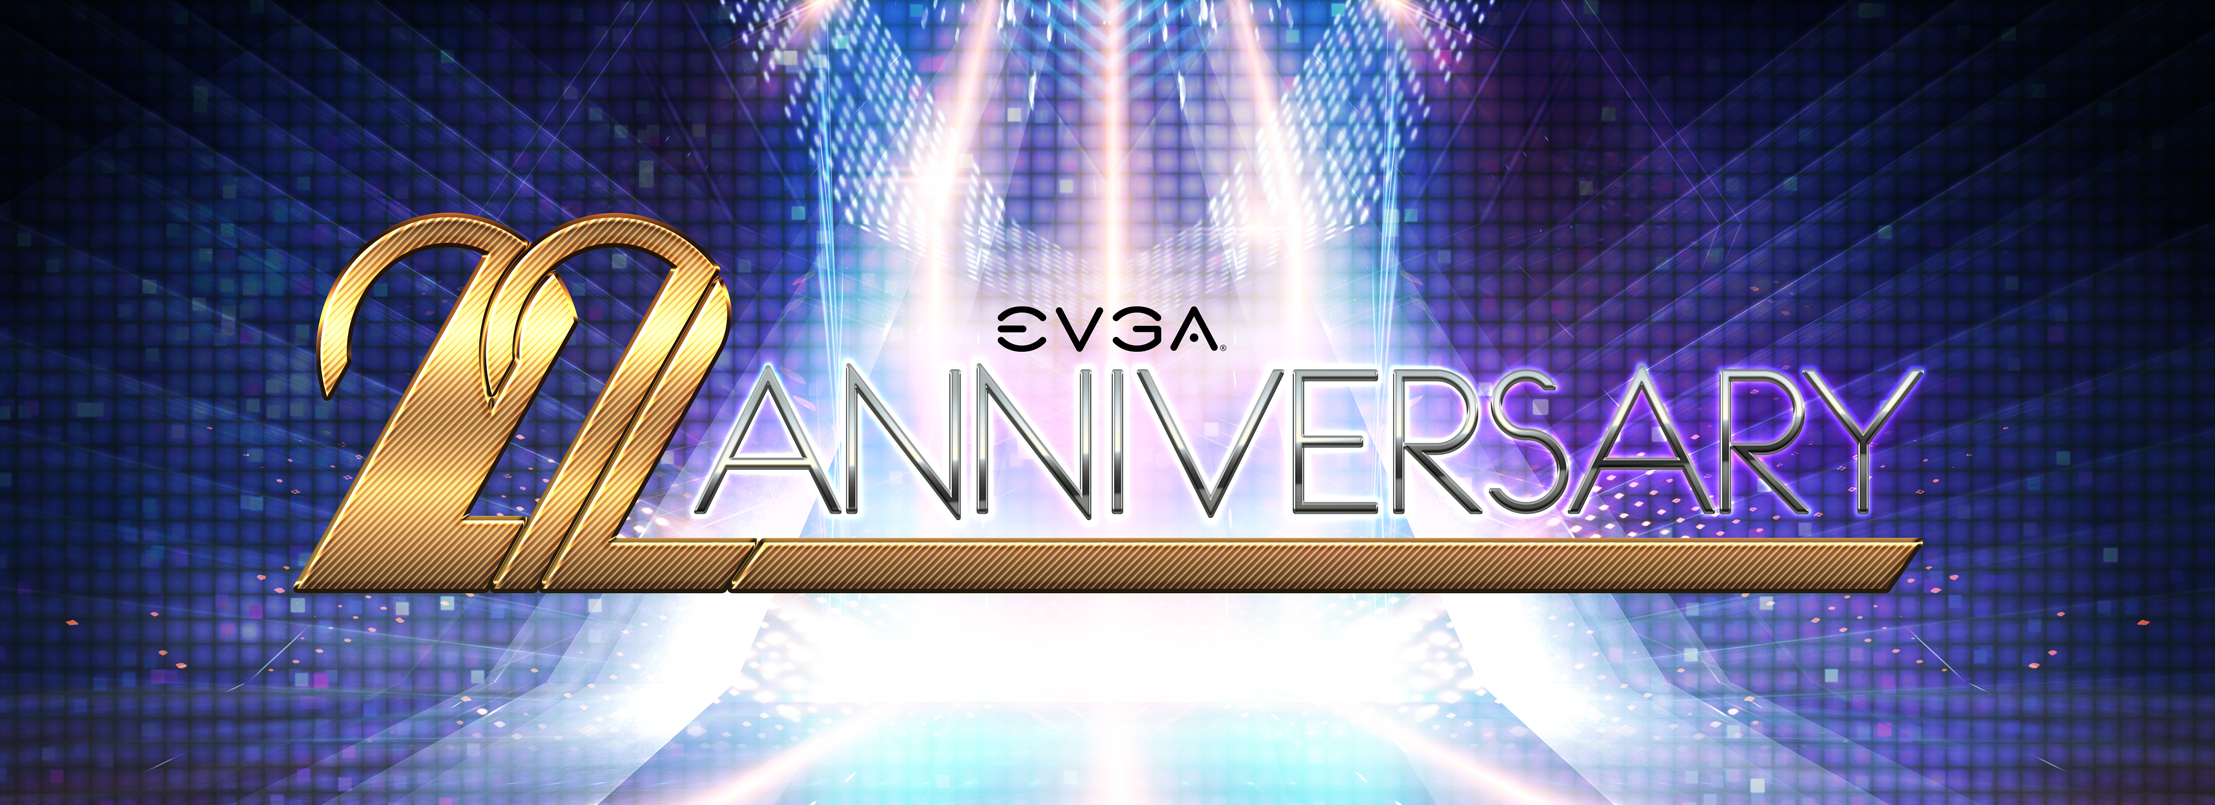 EVGA's 22nd Anniversary - Intel Say Social Media